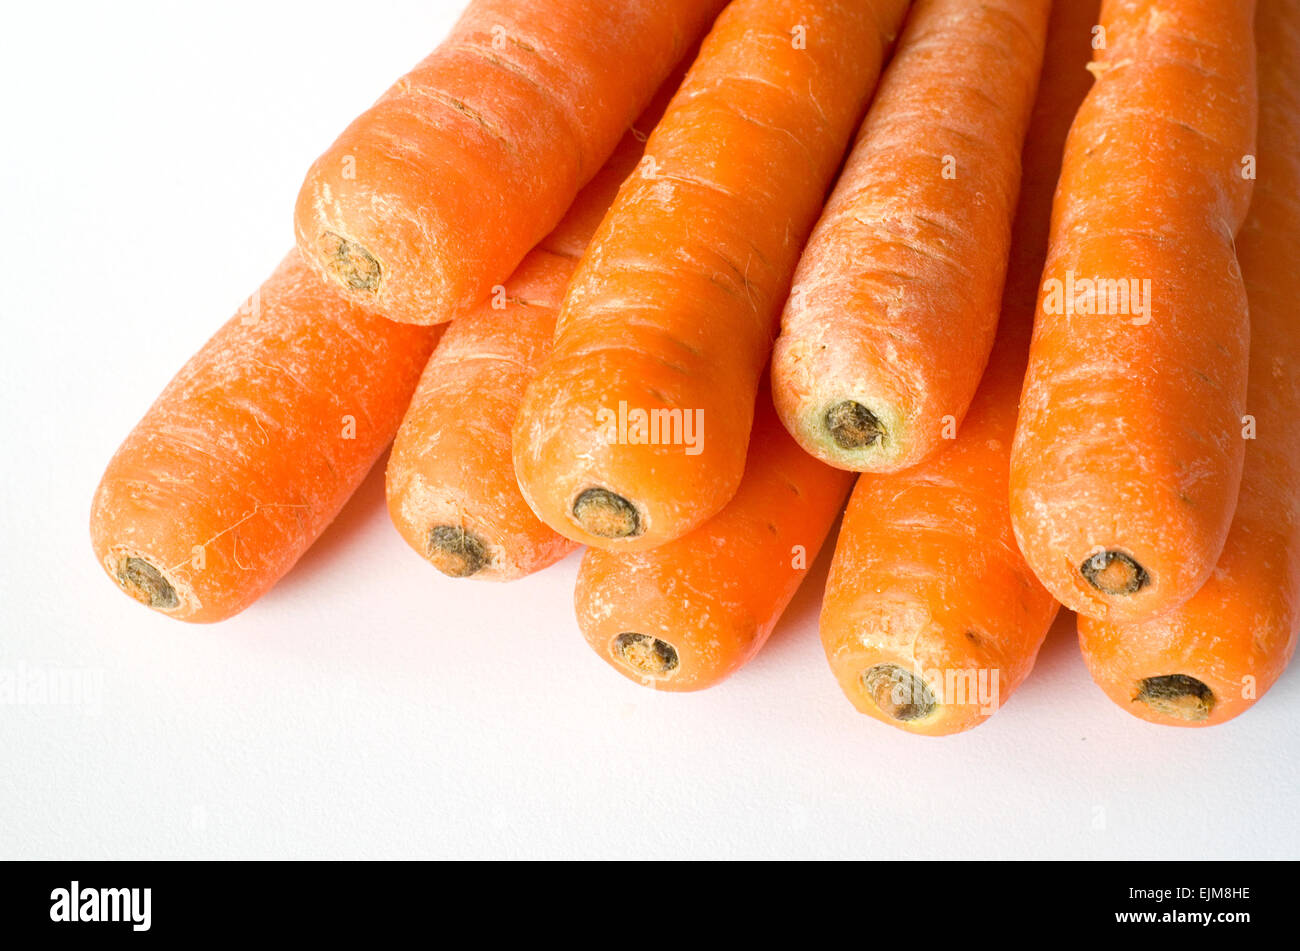 Pile of unpeeled orange carrots. Stock Photo